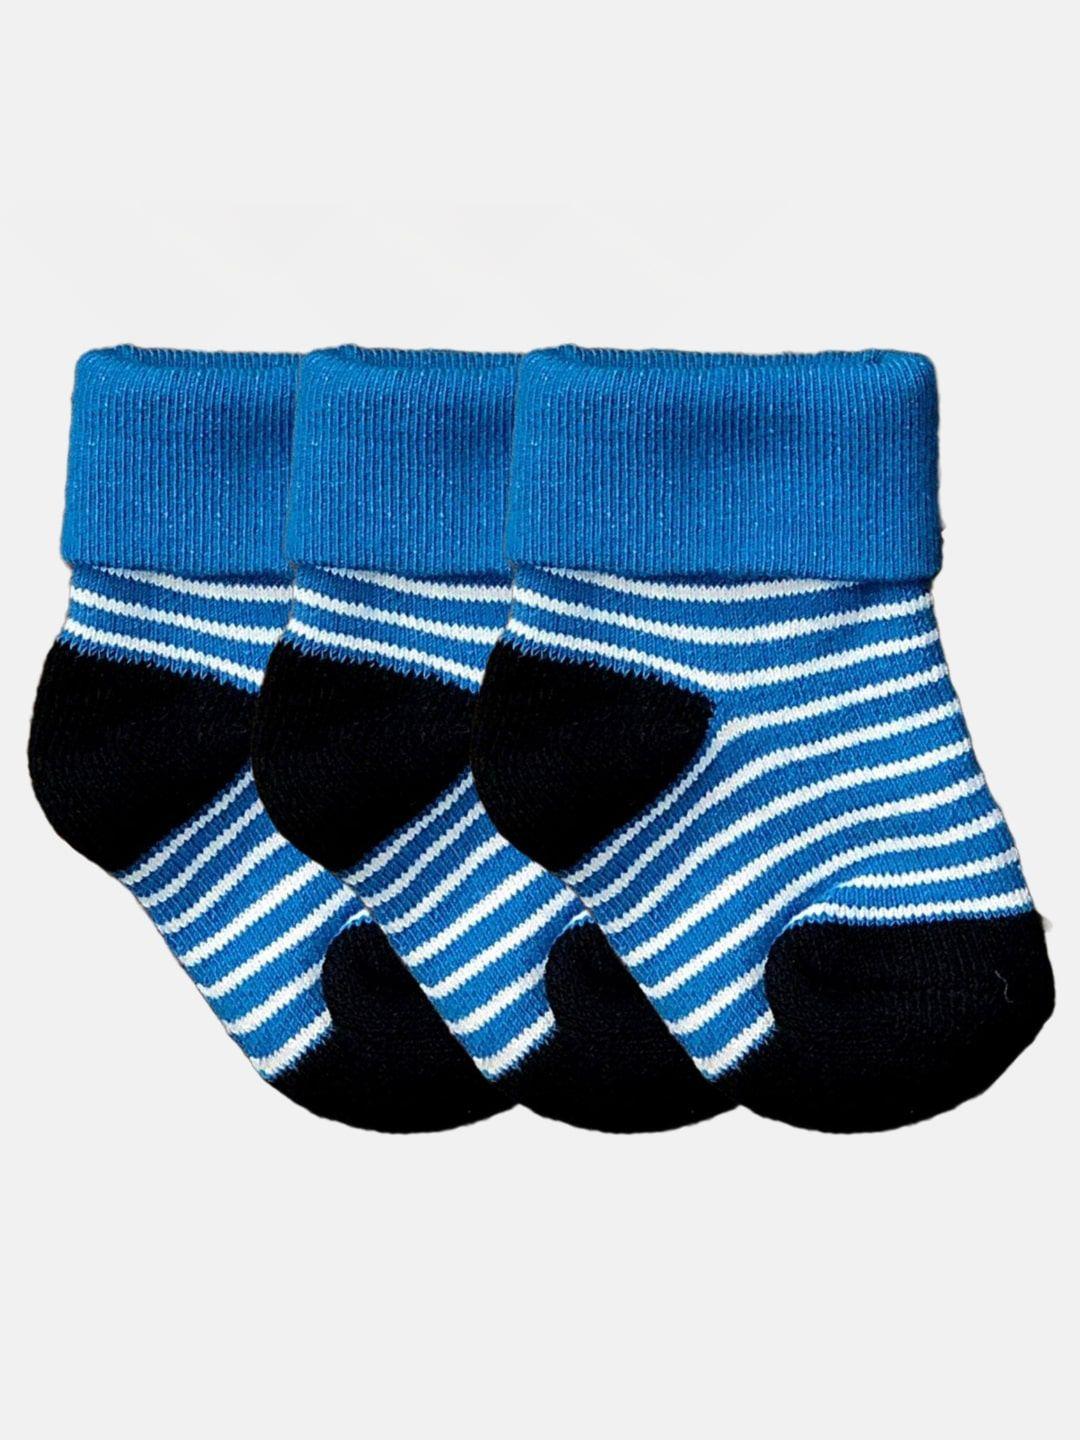 n2s next2skin infant girls pack of 3 patterned cotton ankle-length socks